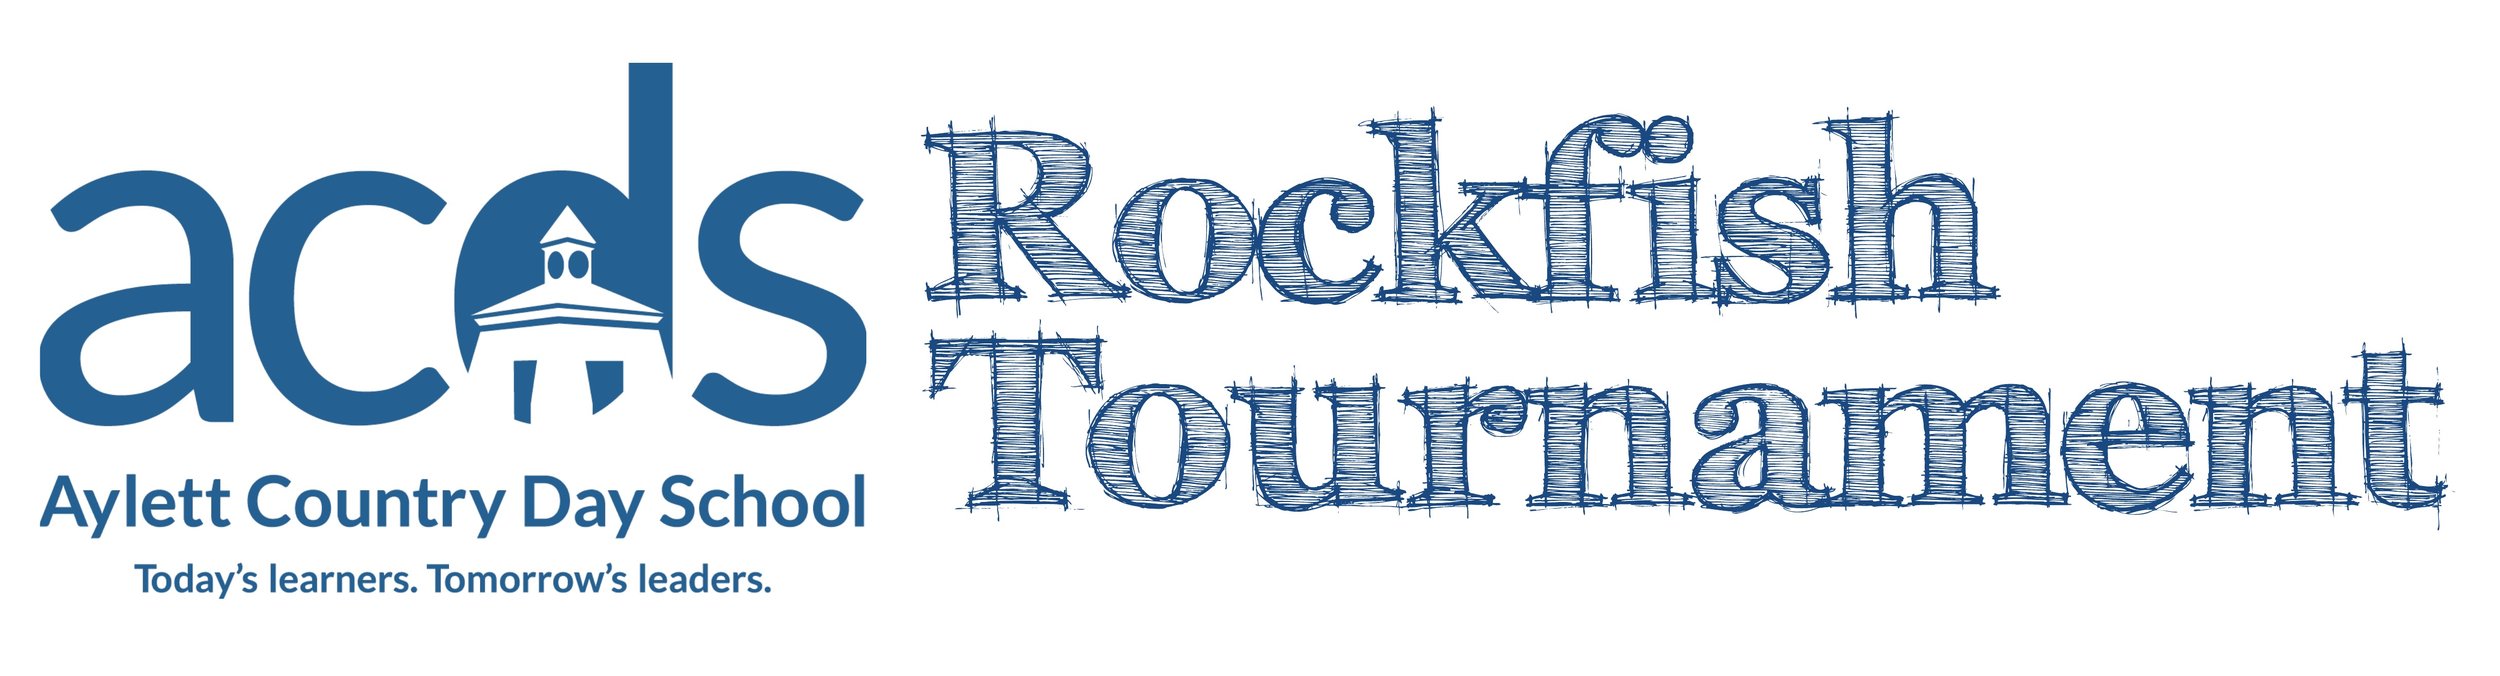 ACDS Rockfish Tournament